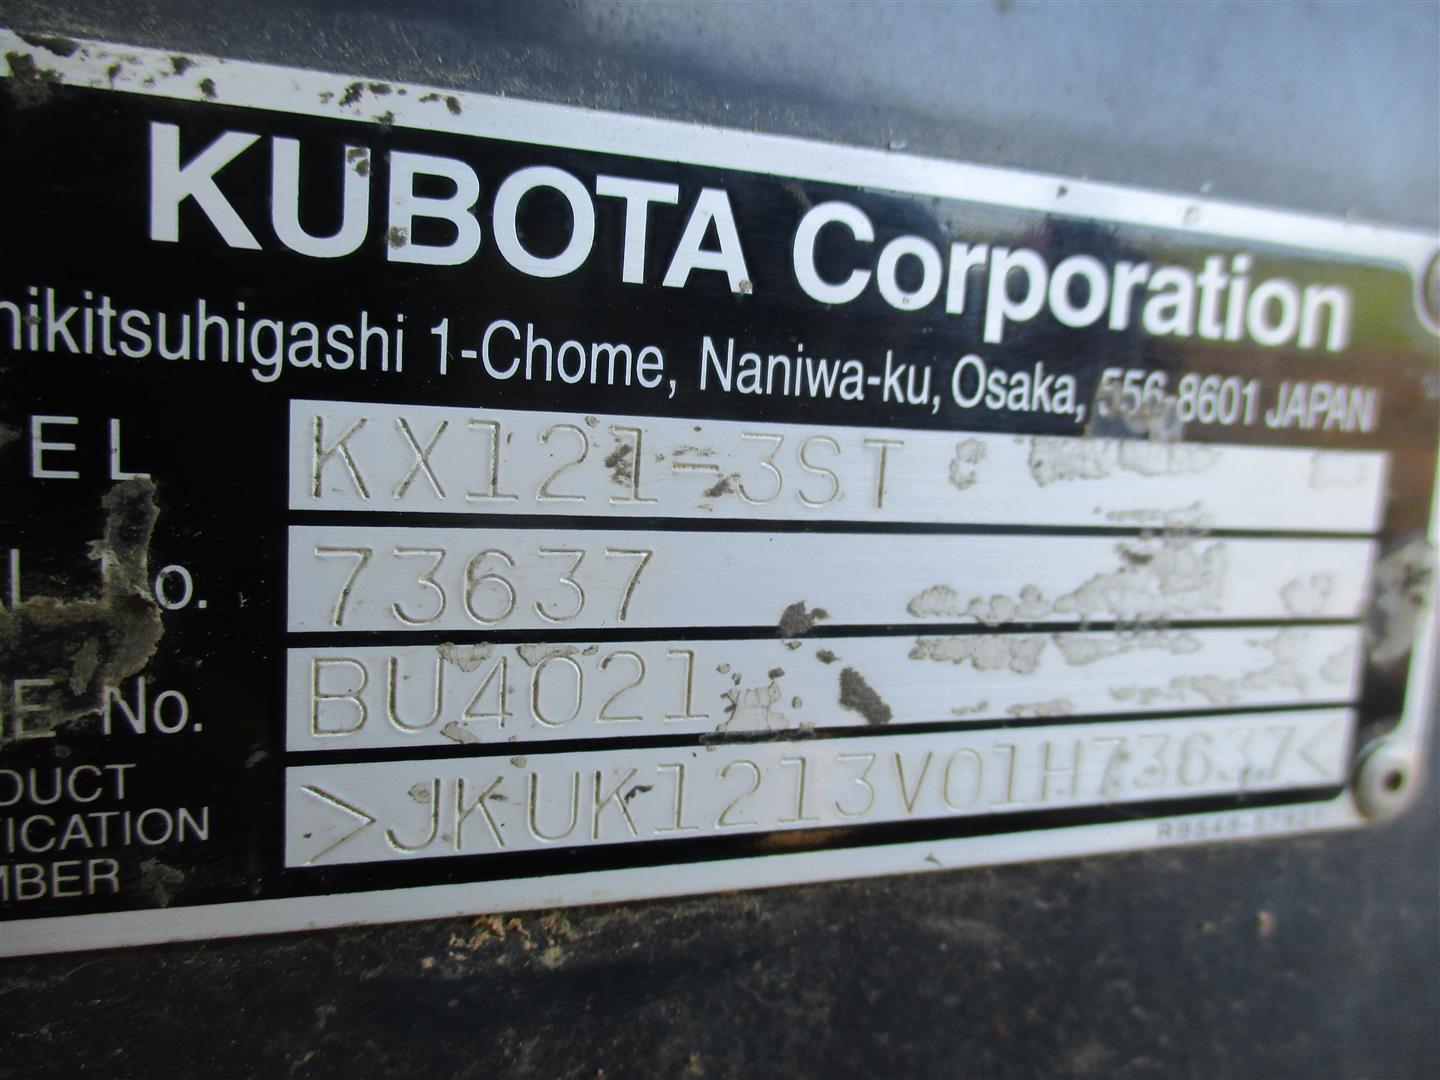 Kubota KX121-3ST